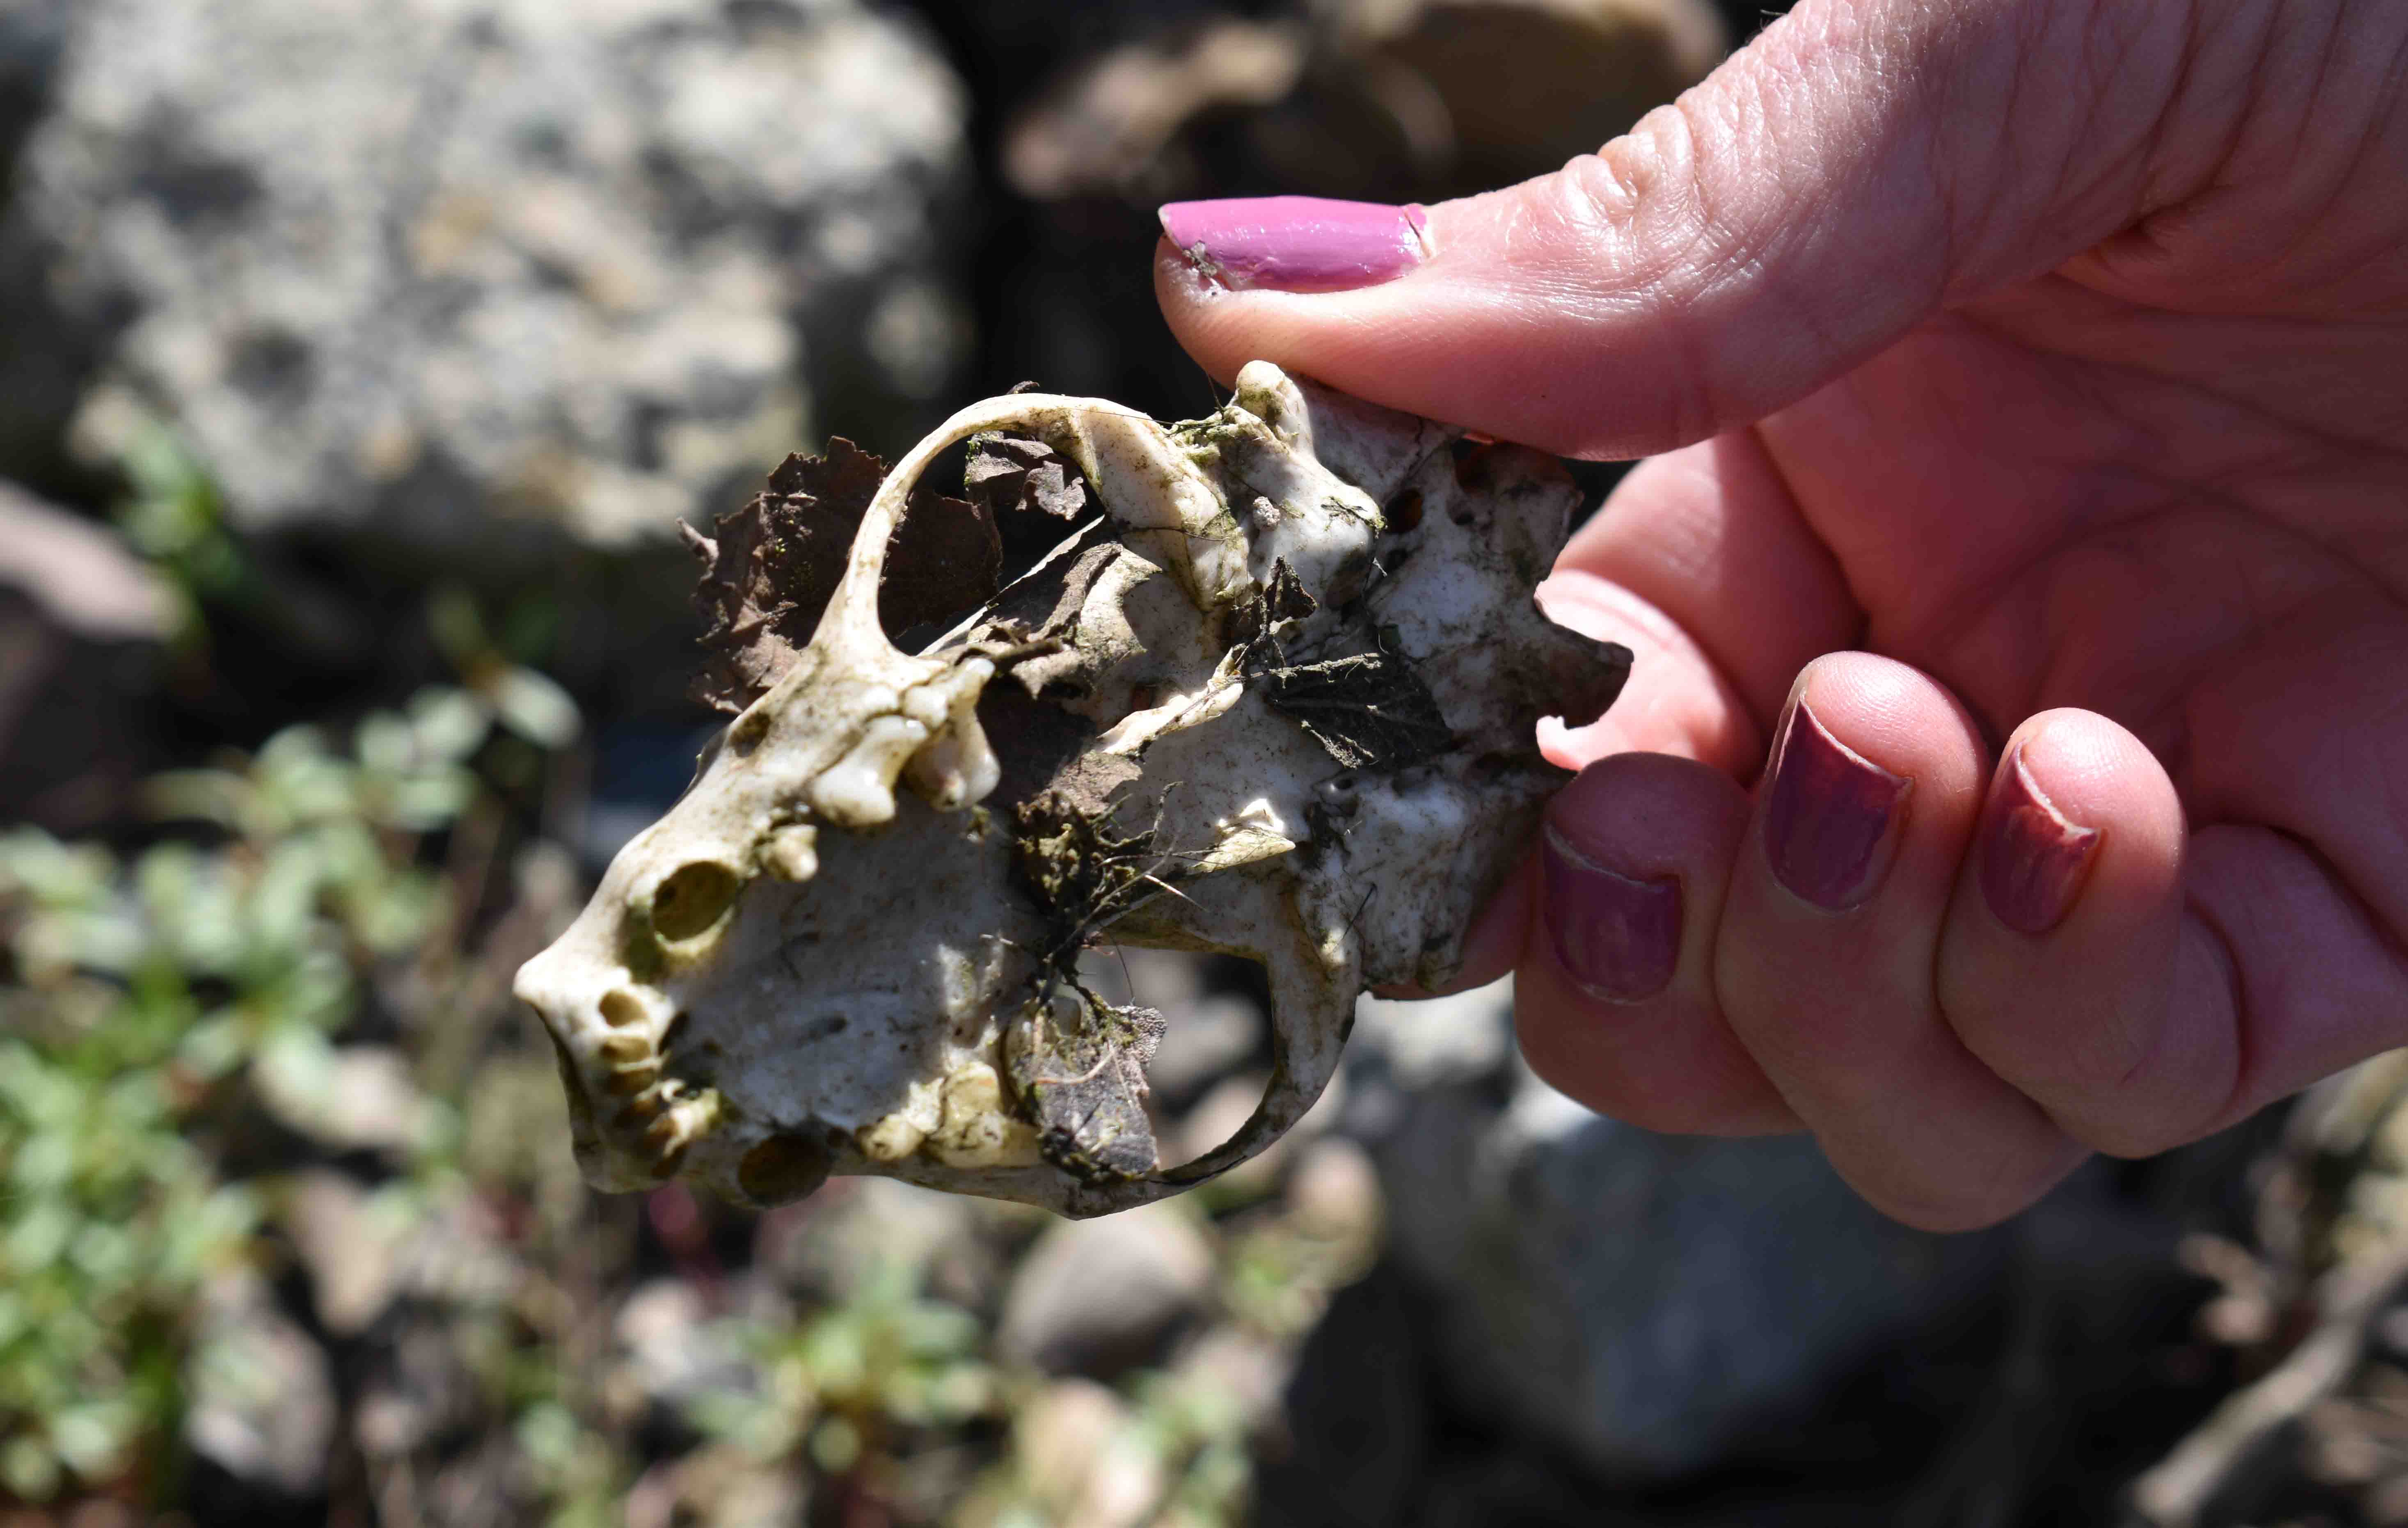 rodent skull found